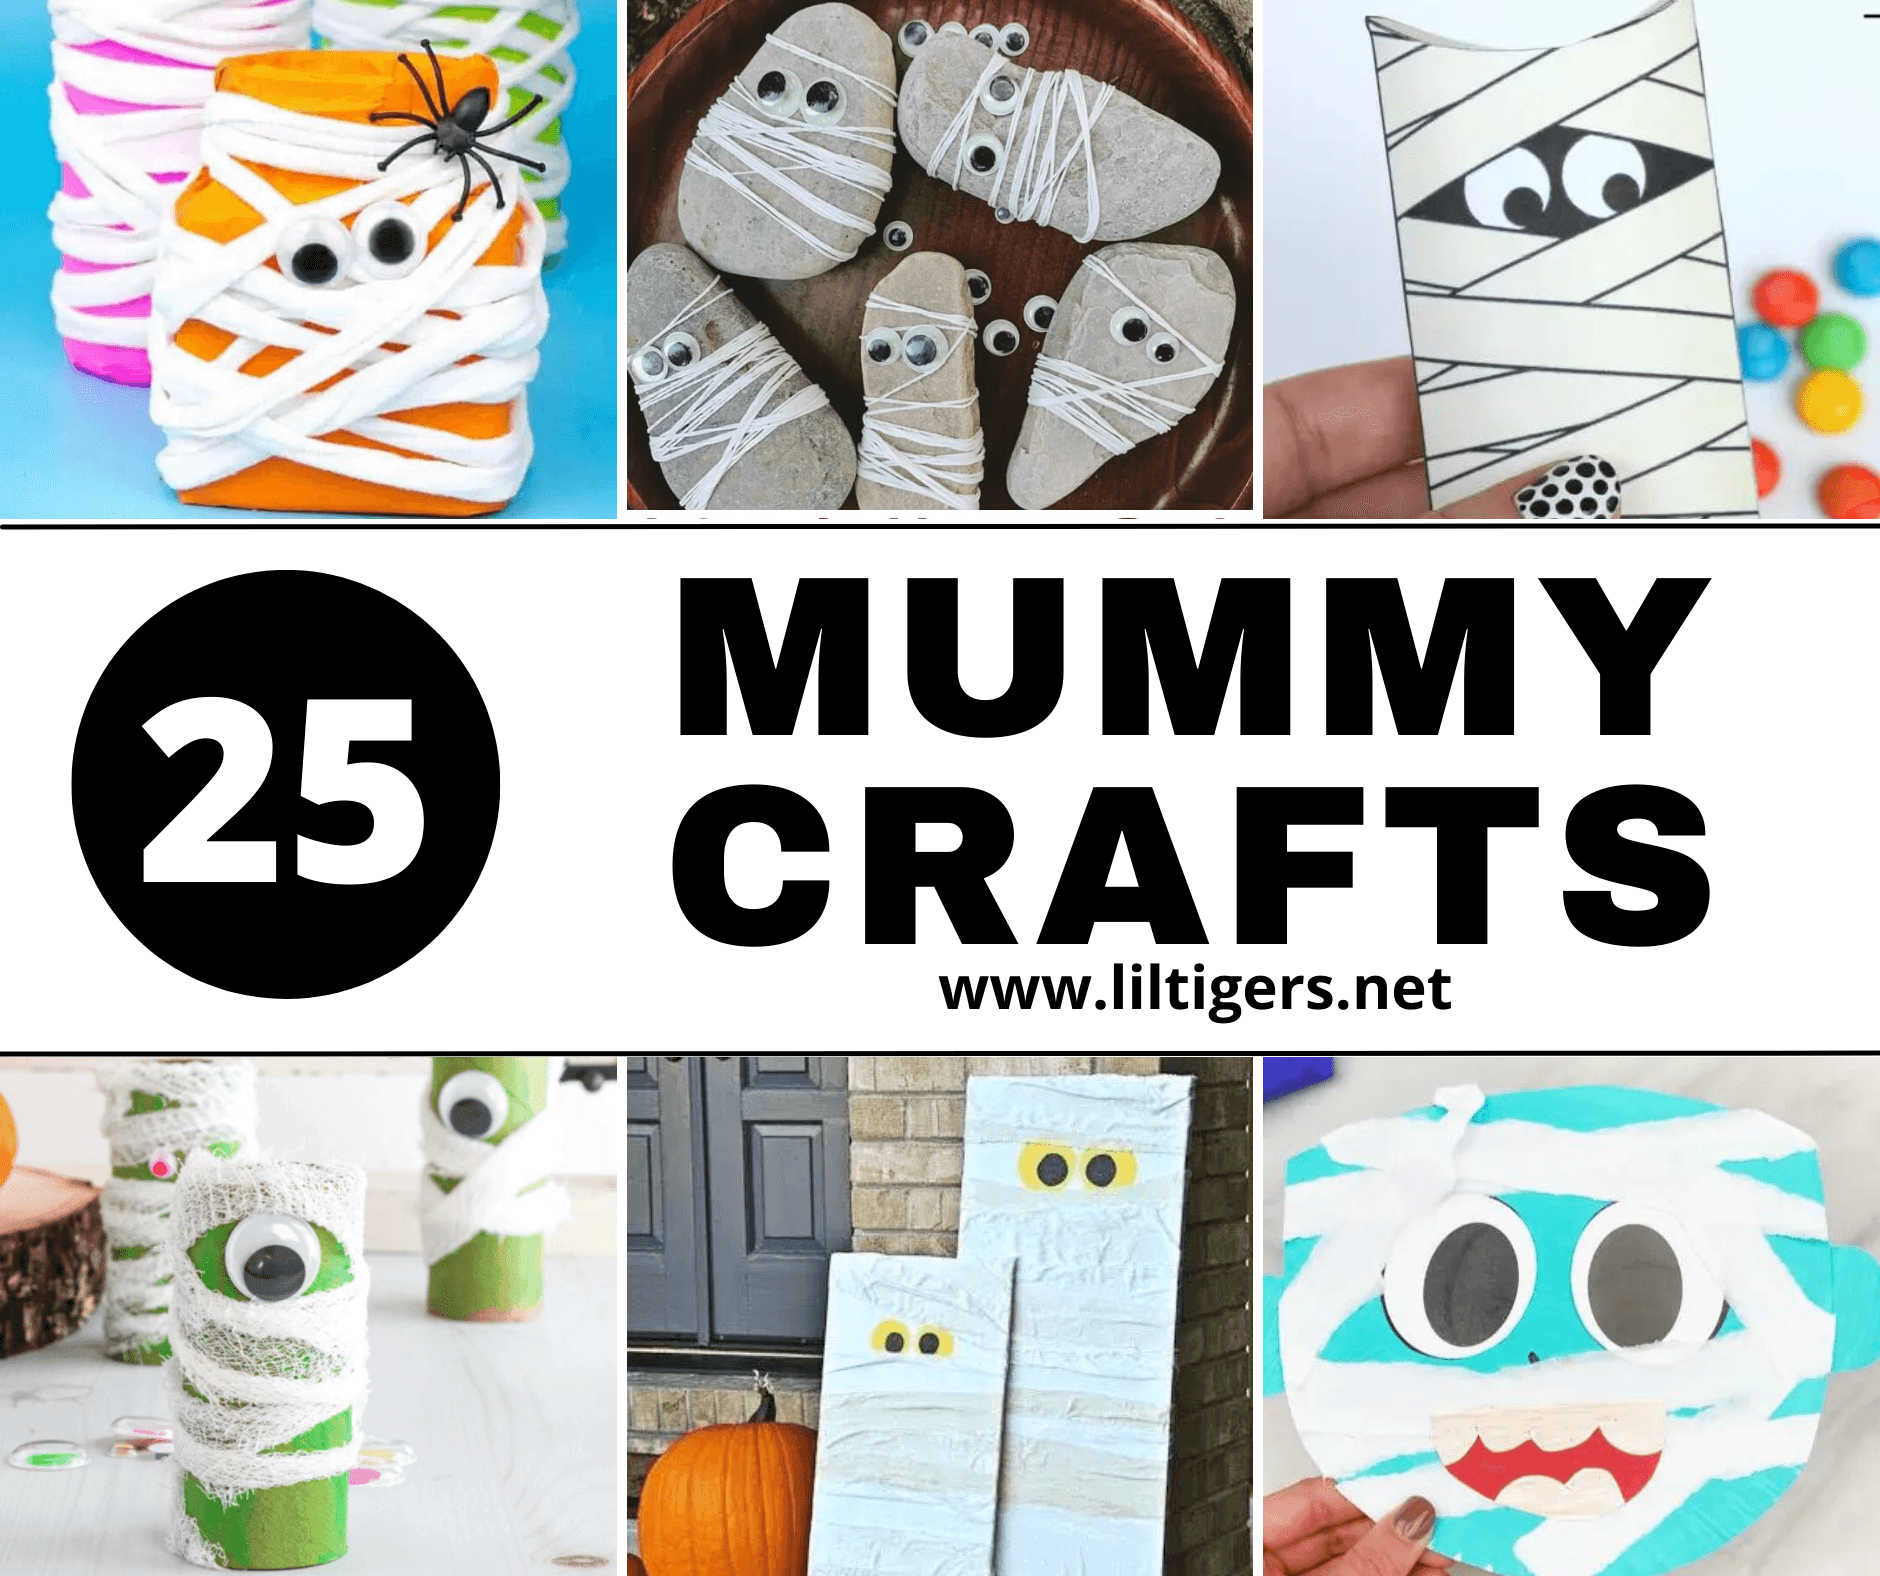 mummy crafts for preschoolers